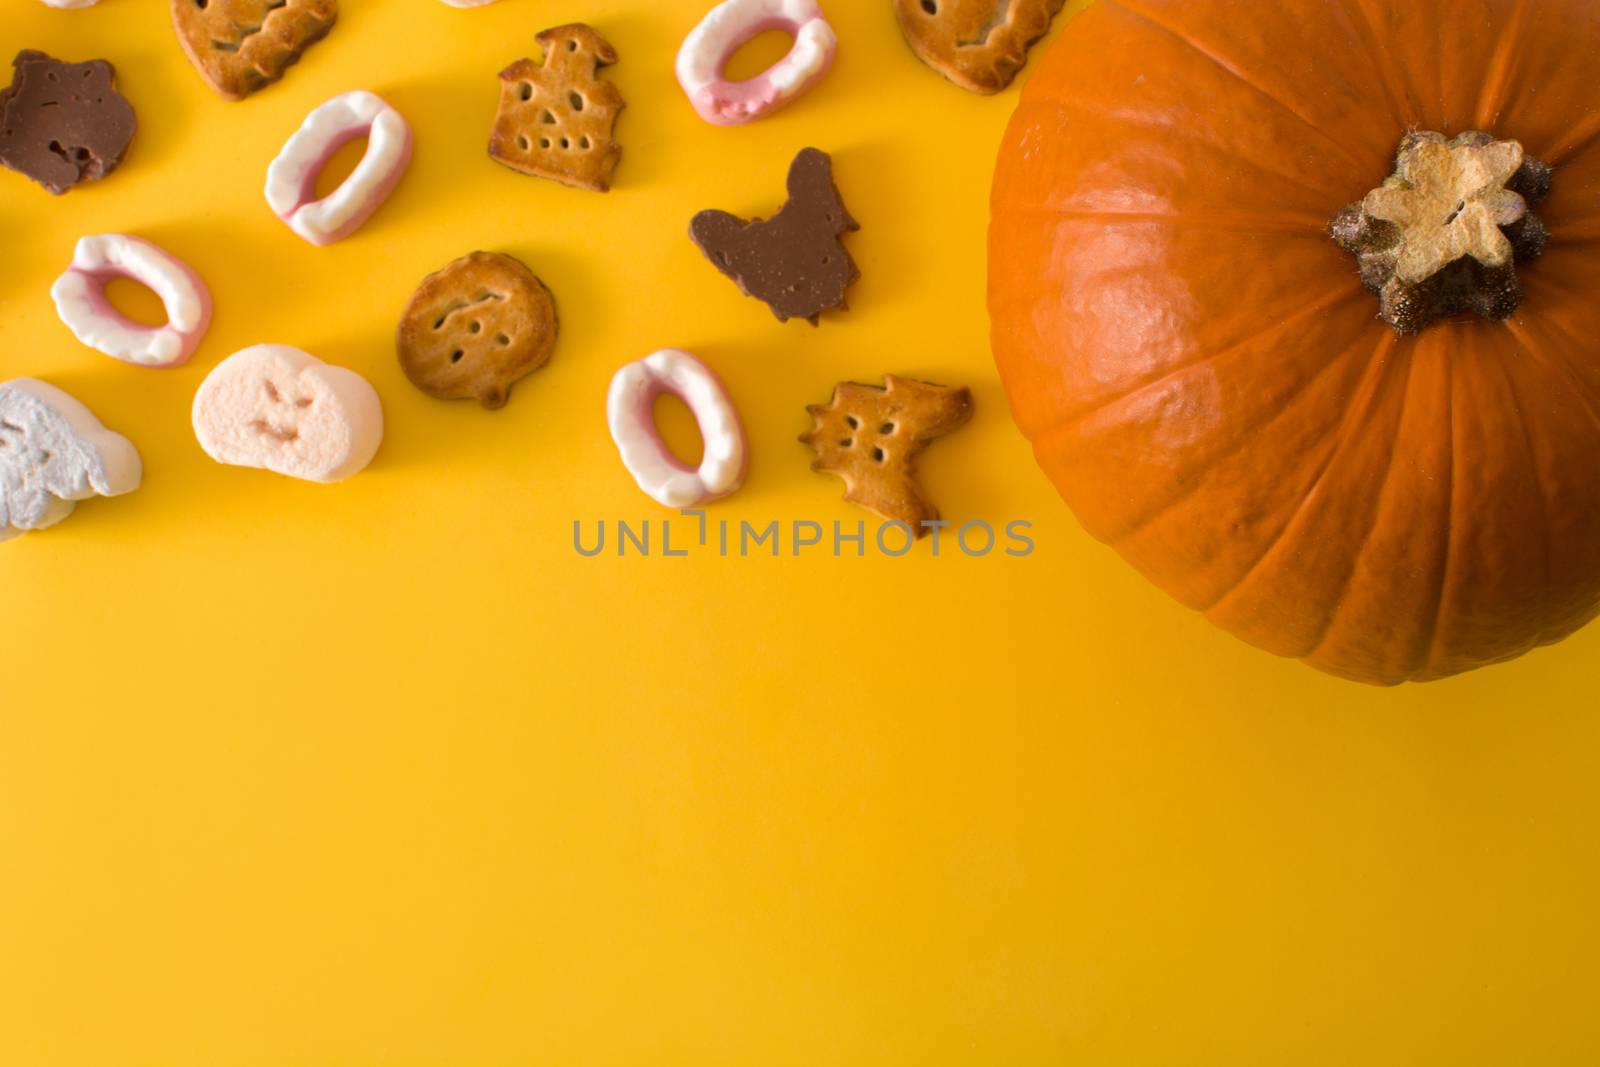 Halloween cookies and Halloween pumpkin on yellow background.